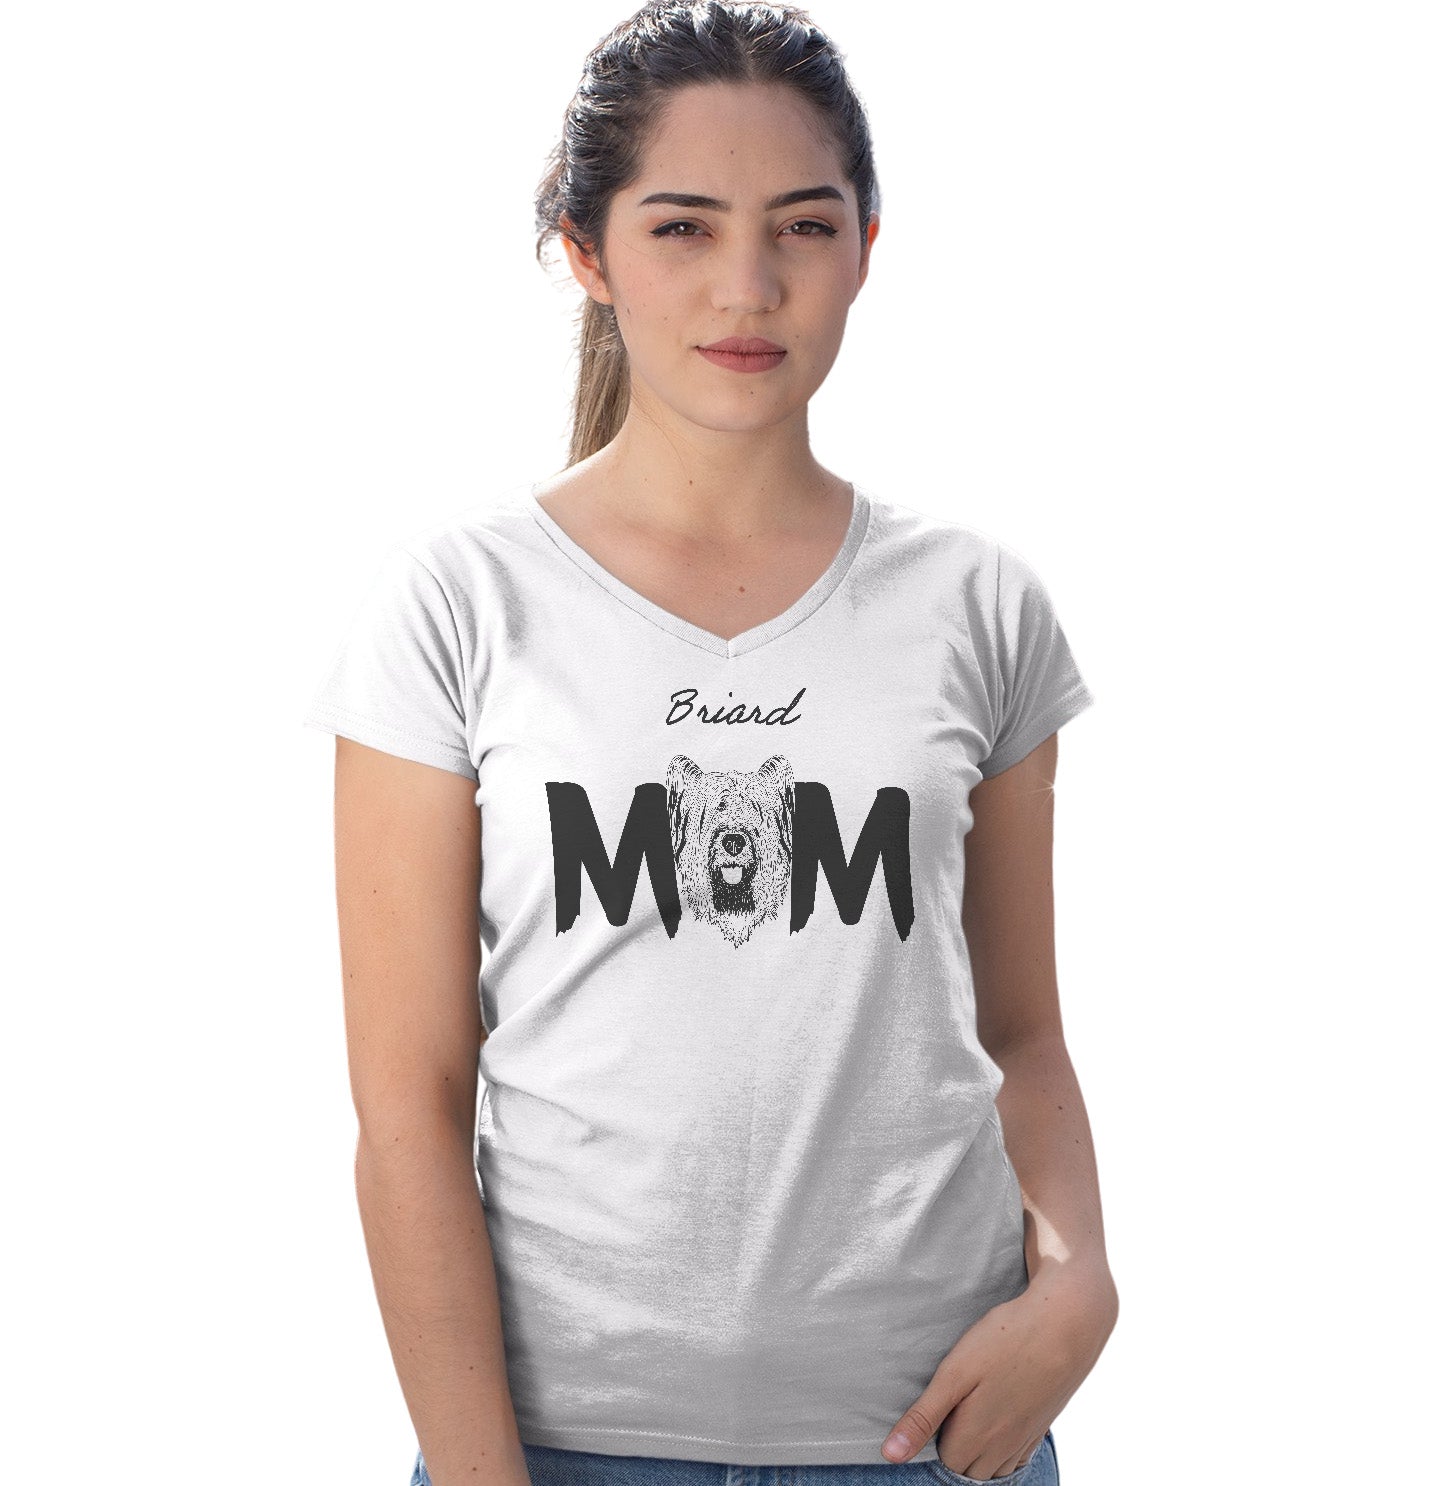 Briard Breed Mom - Women's V-Neck T-Shirt